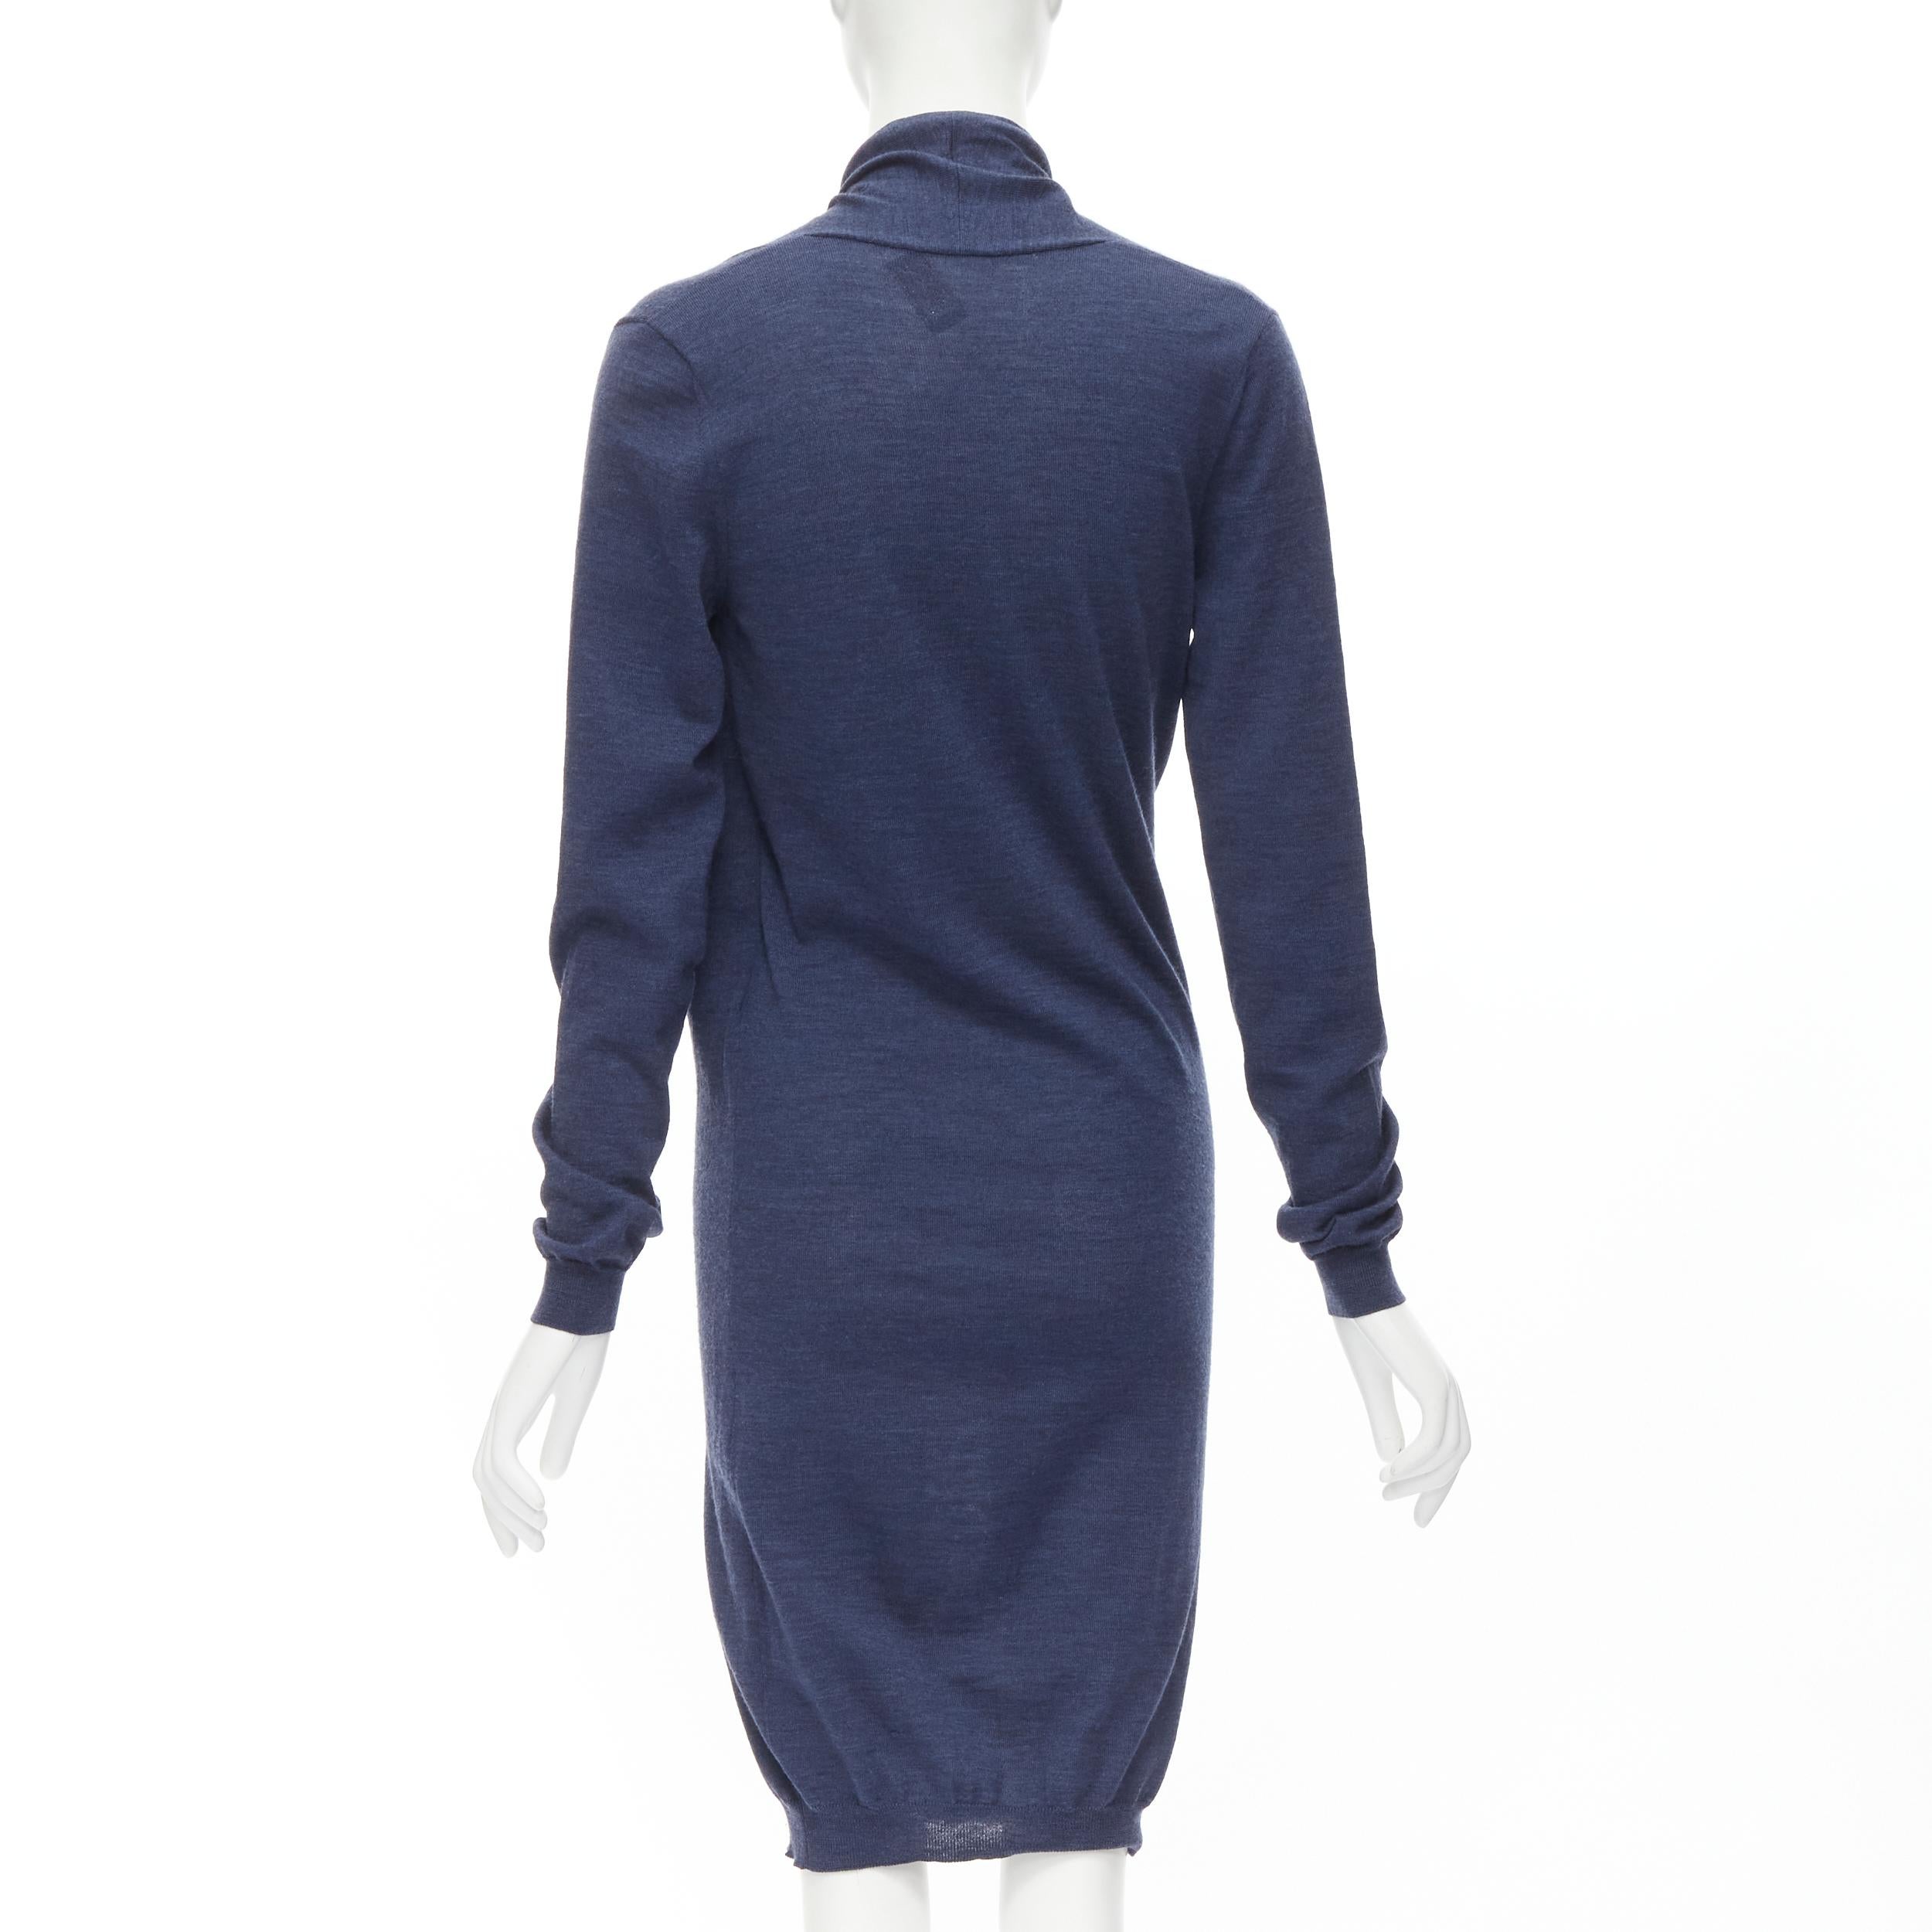 LANVIN Alber Elbaz Les 10 Ans 100% wool wrap neckline knitted dress S 2